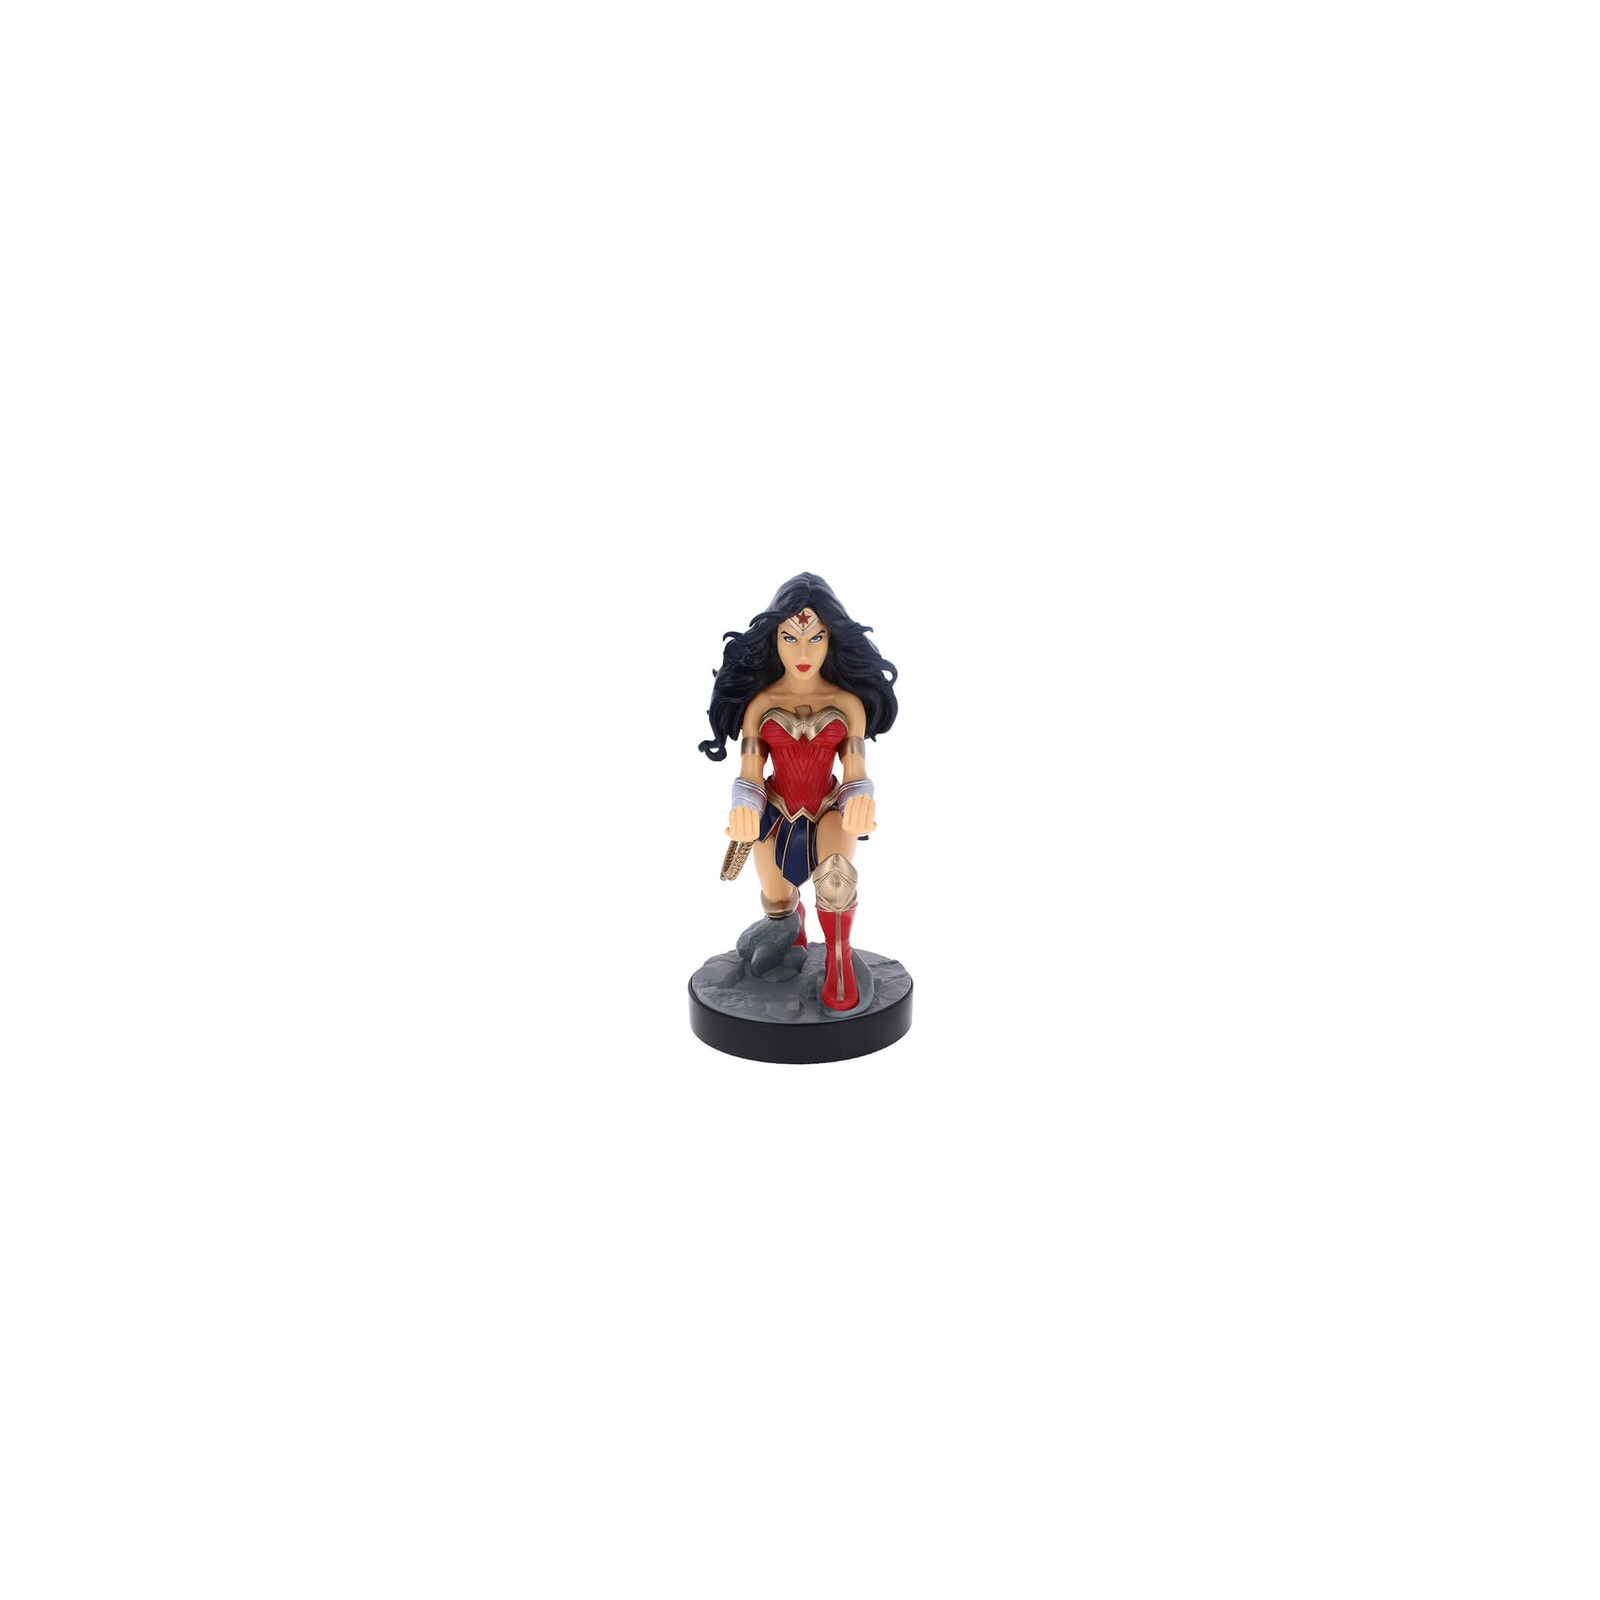 Фигурка-держатель Exquisite Gaming DC Comics Wonder Woman (CGCRDC400359)